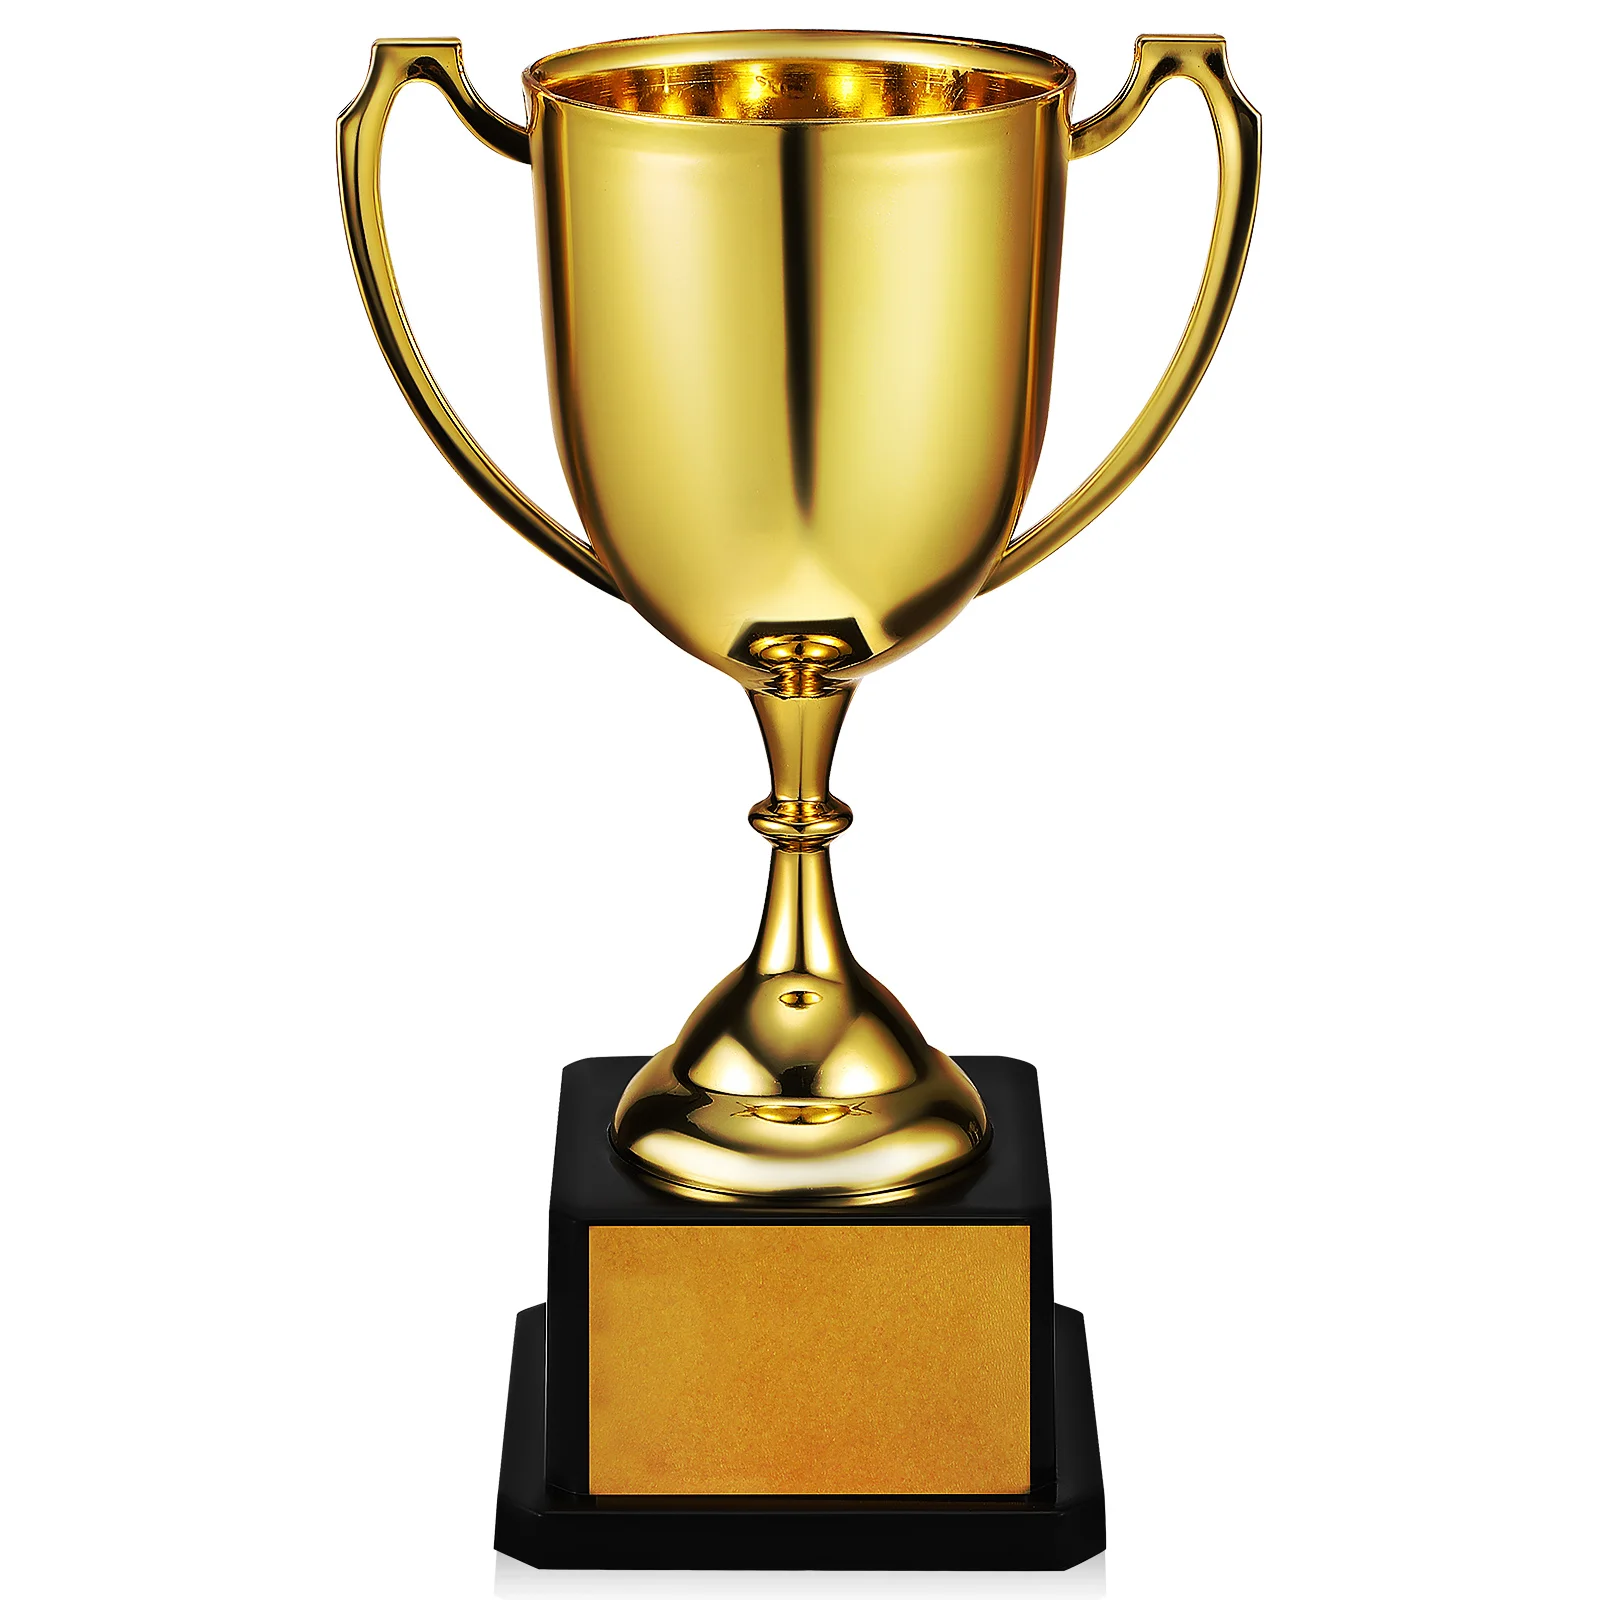 Gold Trophy with Foil Plastic Trophies Mini Halloween For Personal Achievements Prize Cup Party Favors